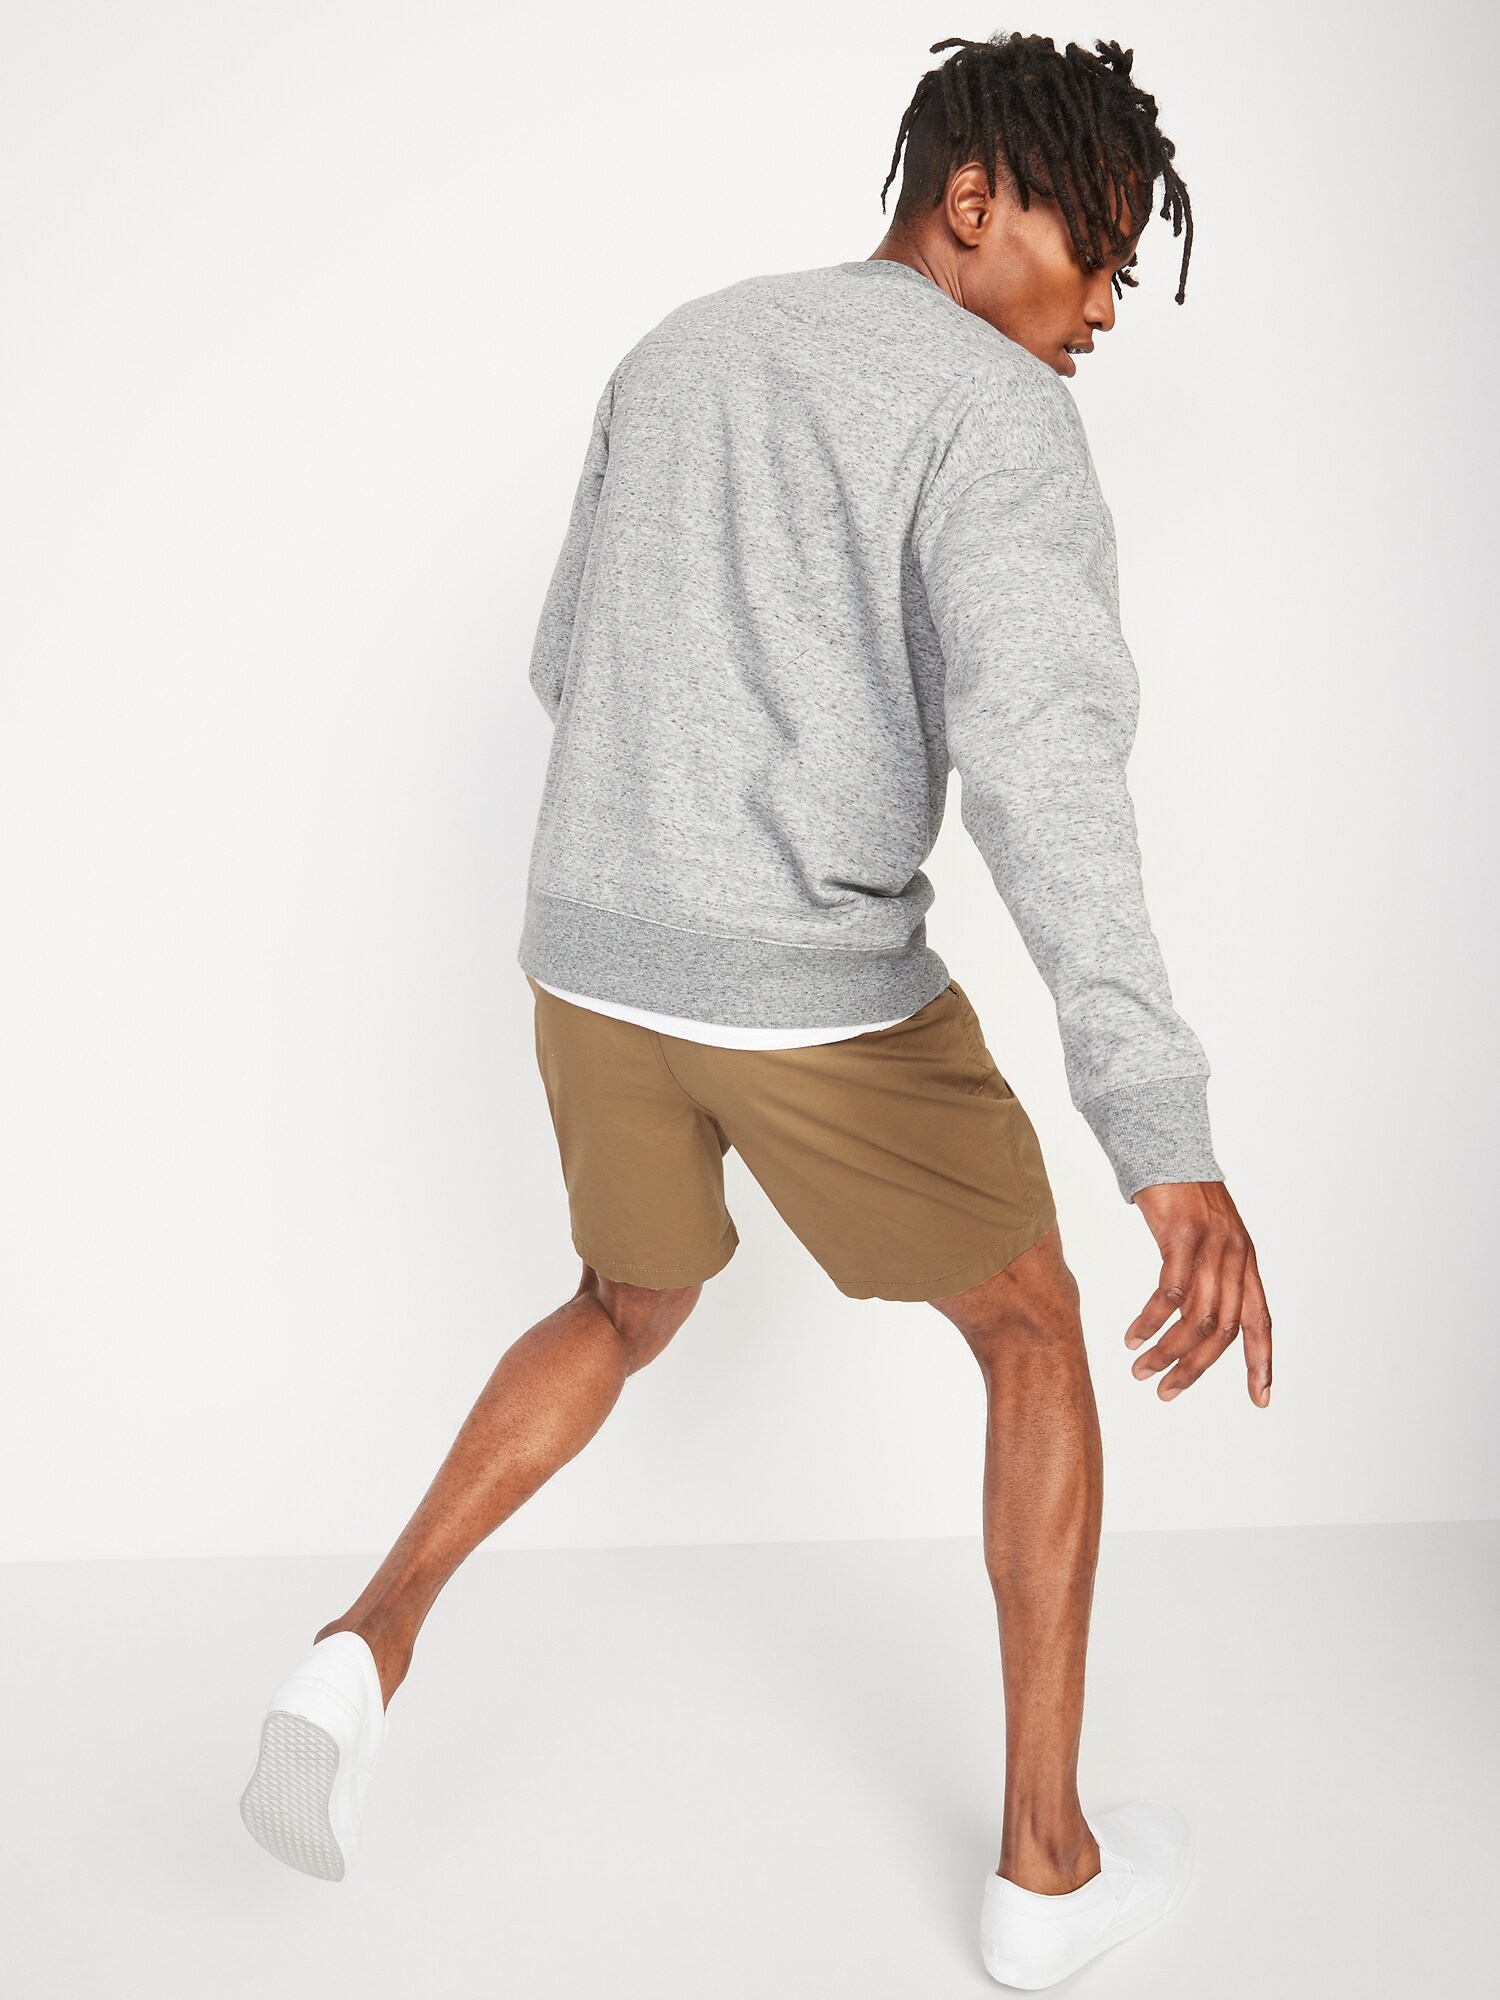 OGC Chino Jogger Shorts -- 5-inch inseam